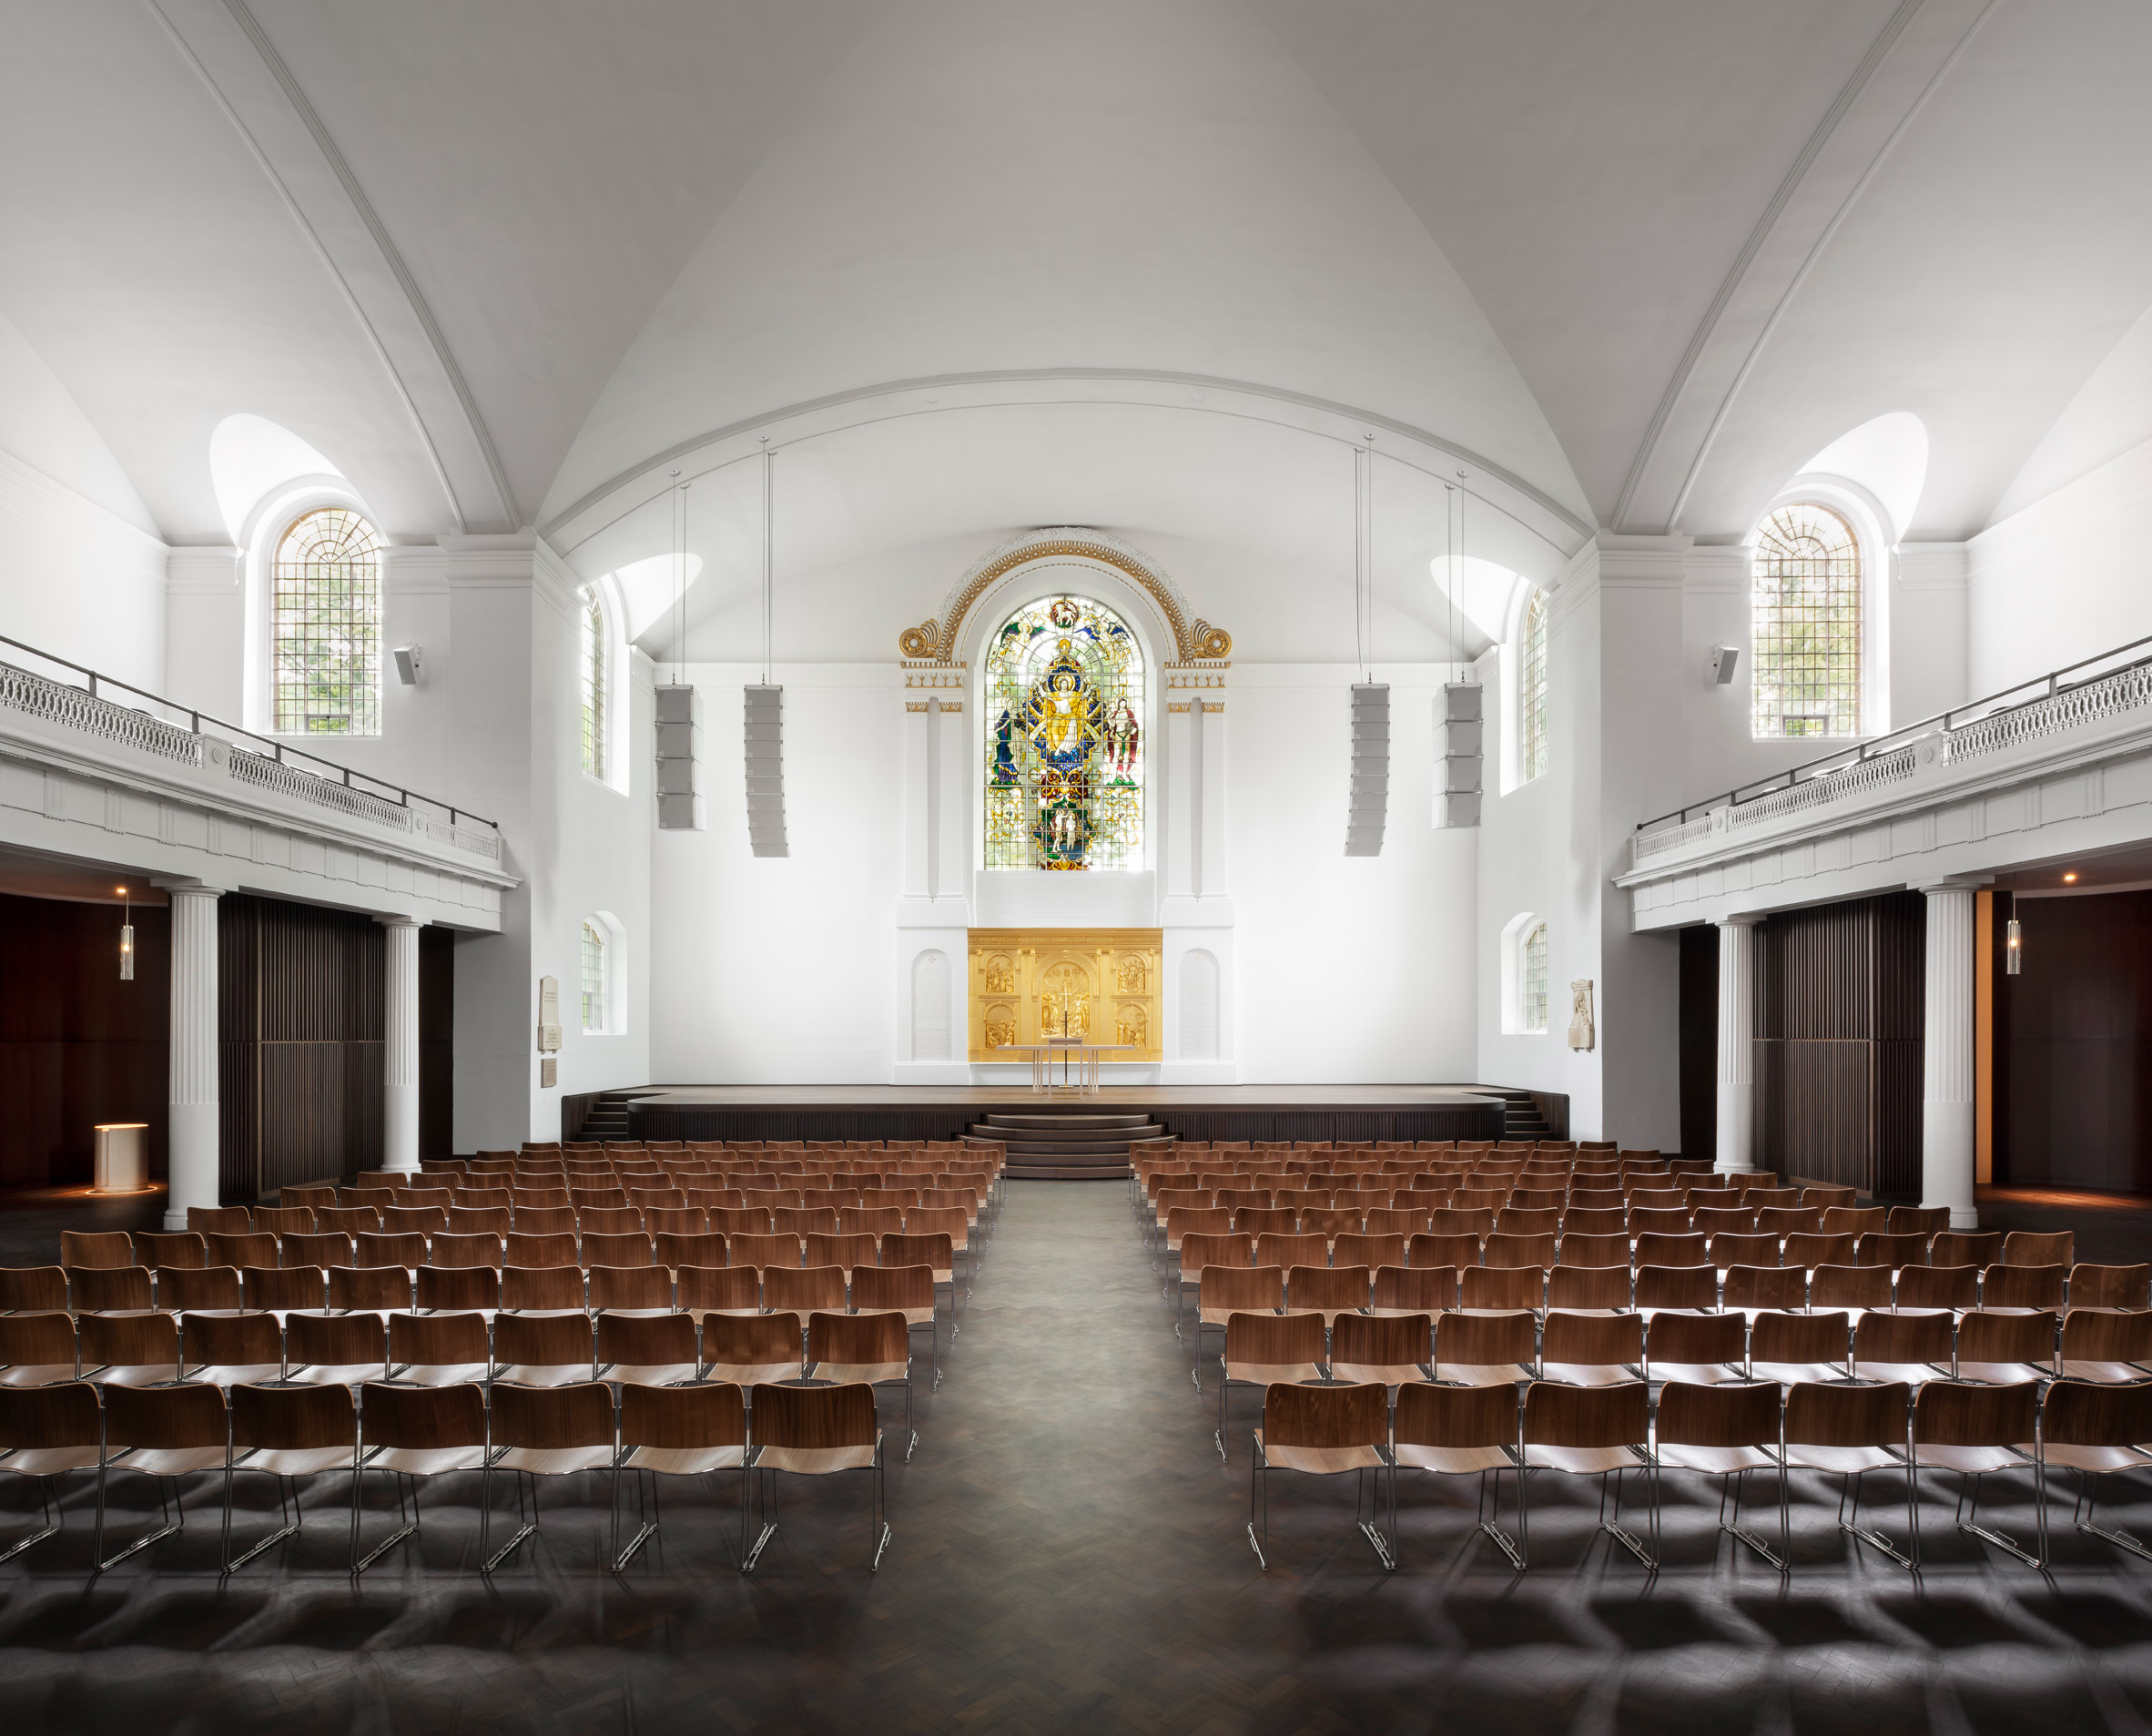 The refurbished nave of St John at Hackney by John Pawson and Thomas Ford & Partners